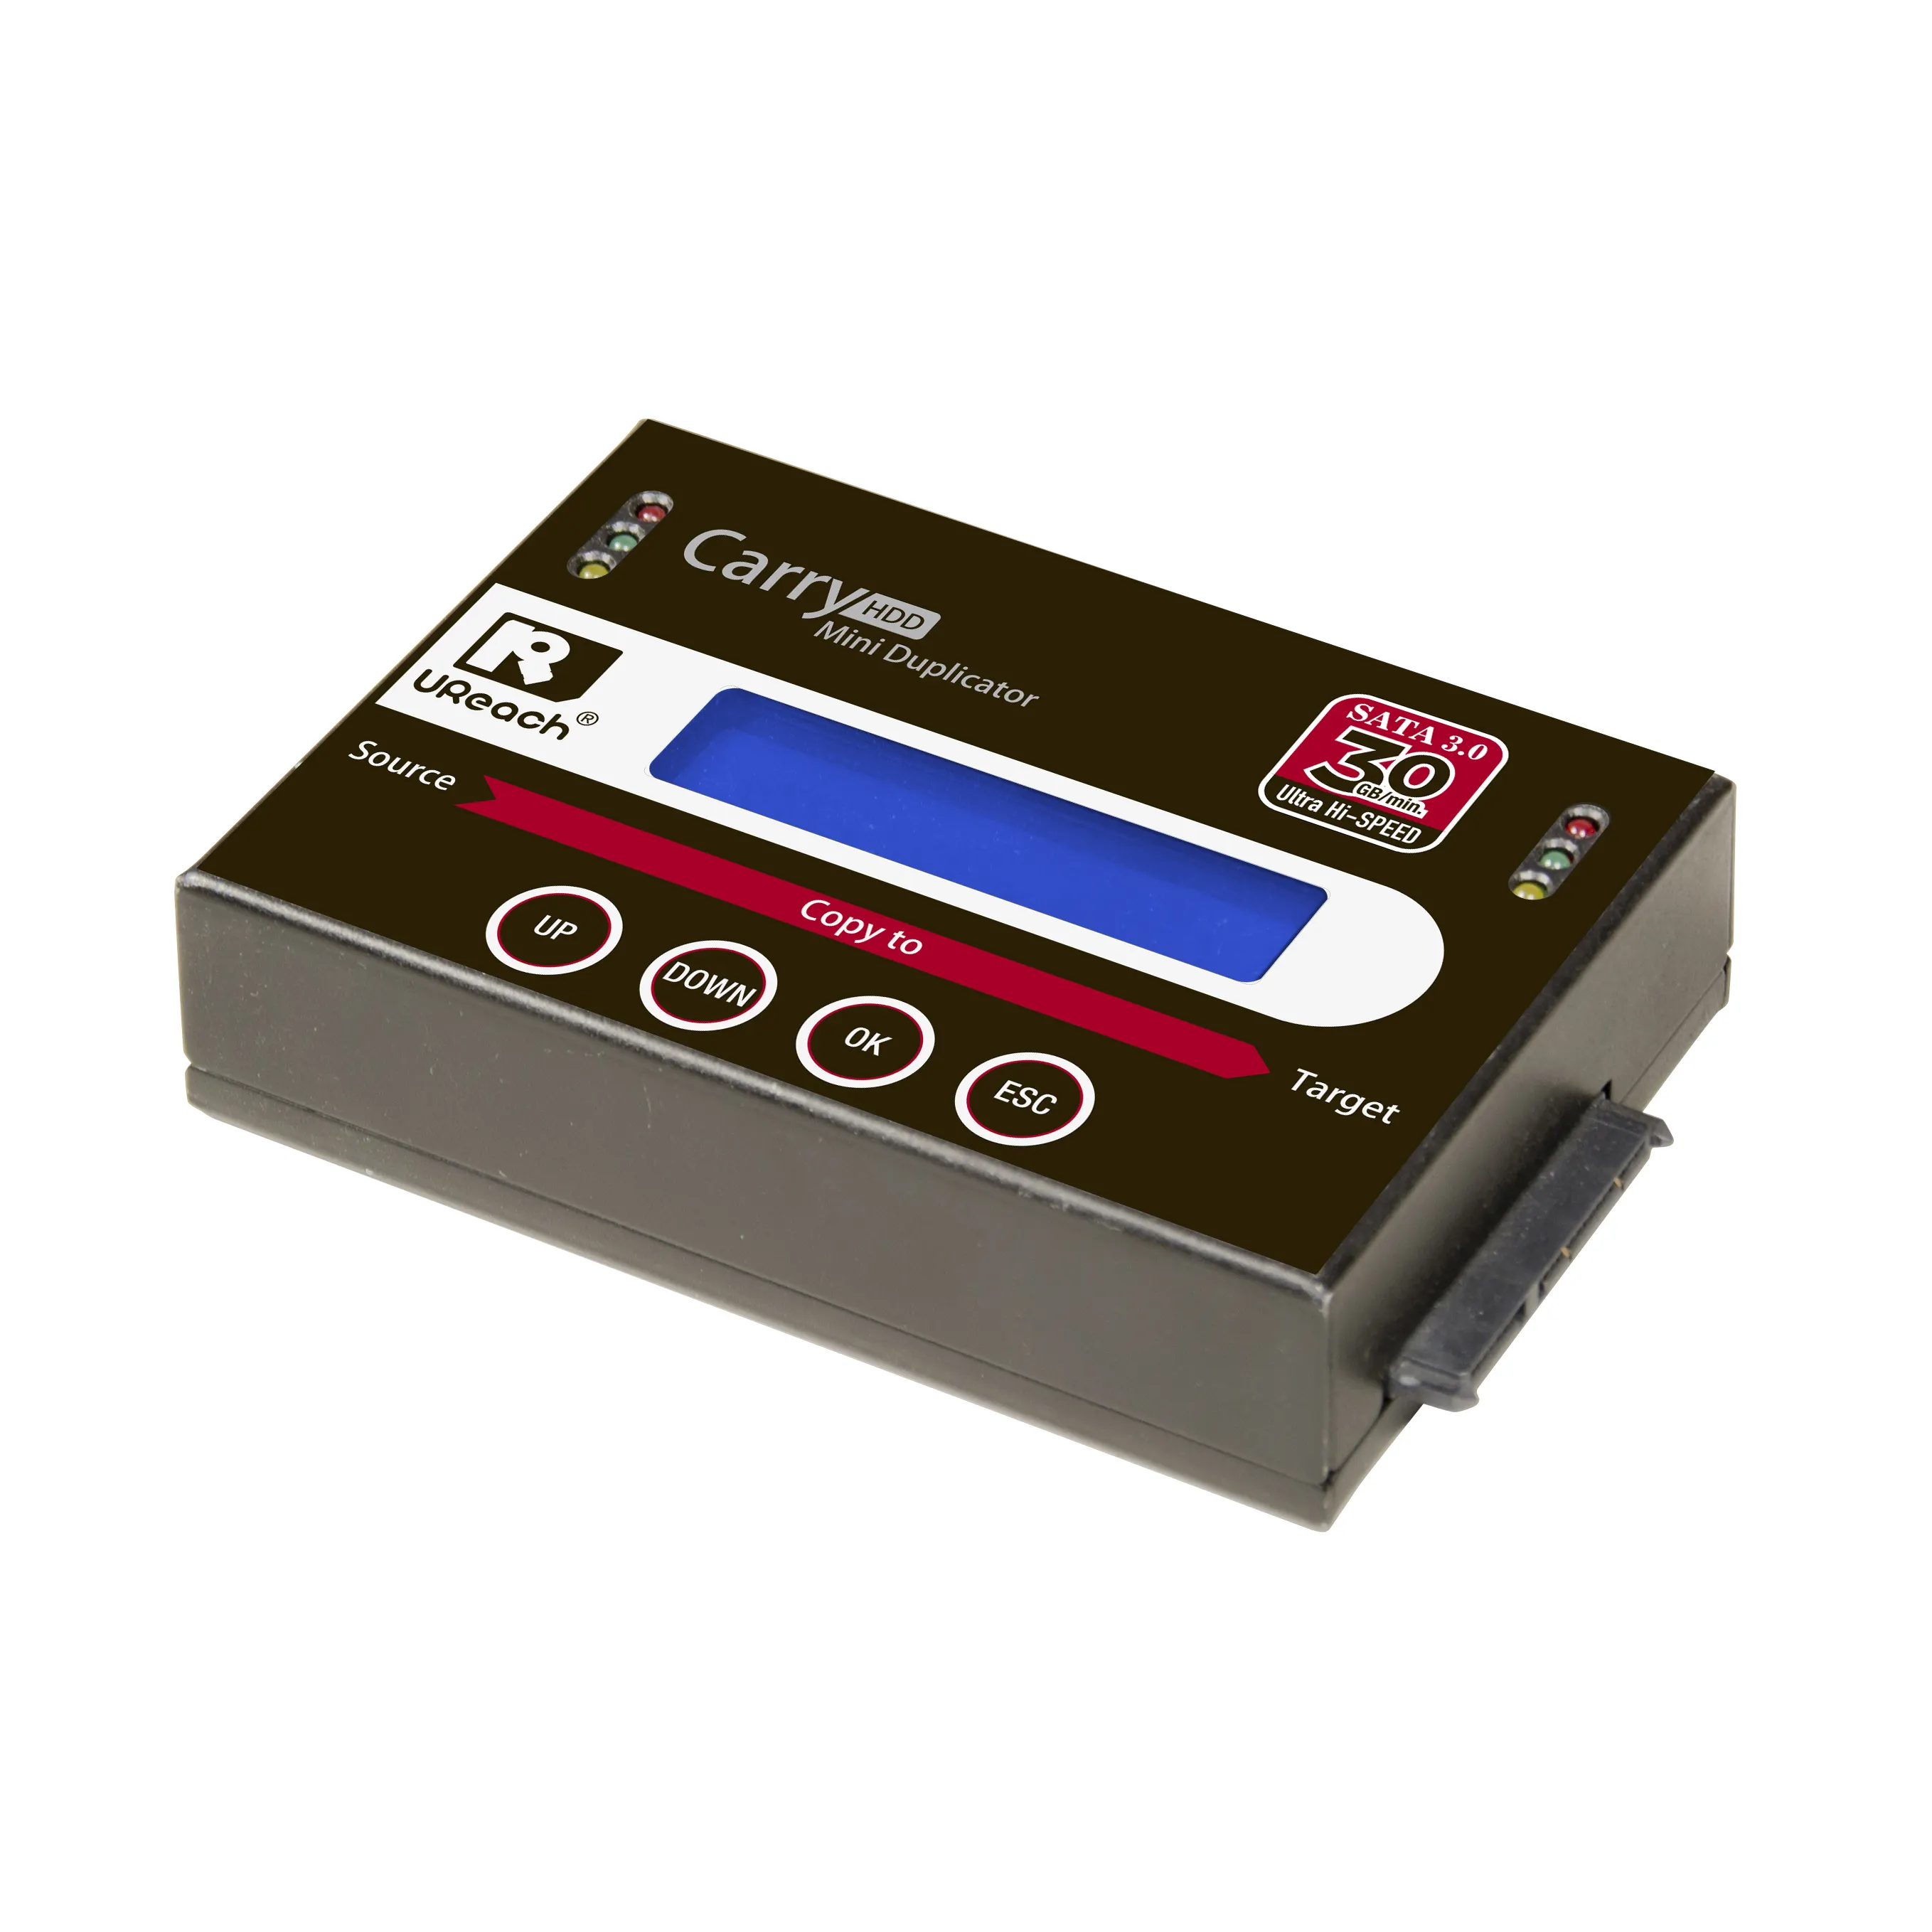 HDD SSD מכונת צילום תחנת עגינה 30Gbpm סופר גבוהה מהירות עצמאי דיסק קשיח מעתק & עותק מכונה